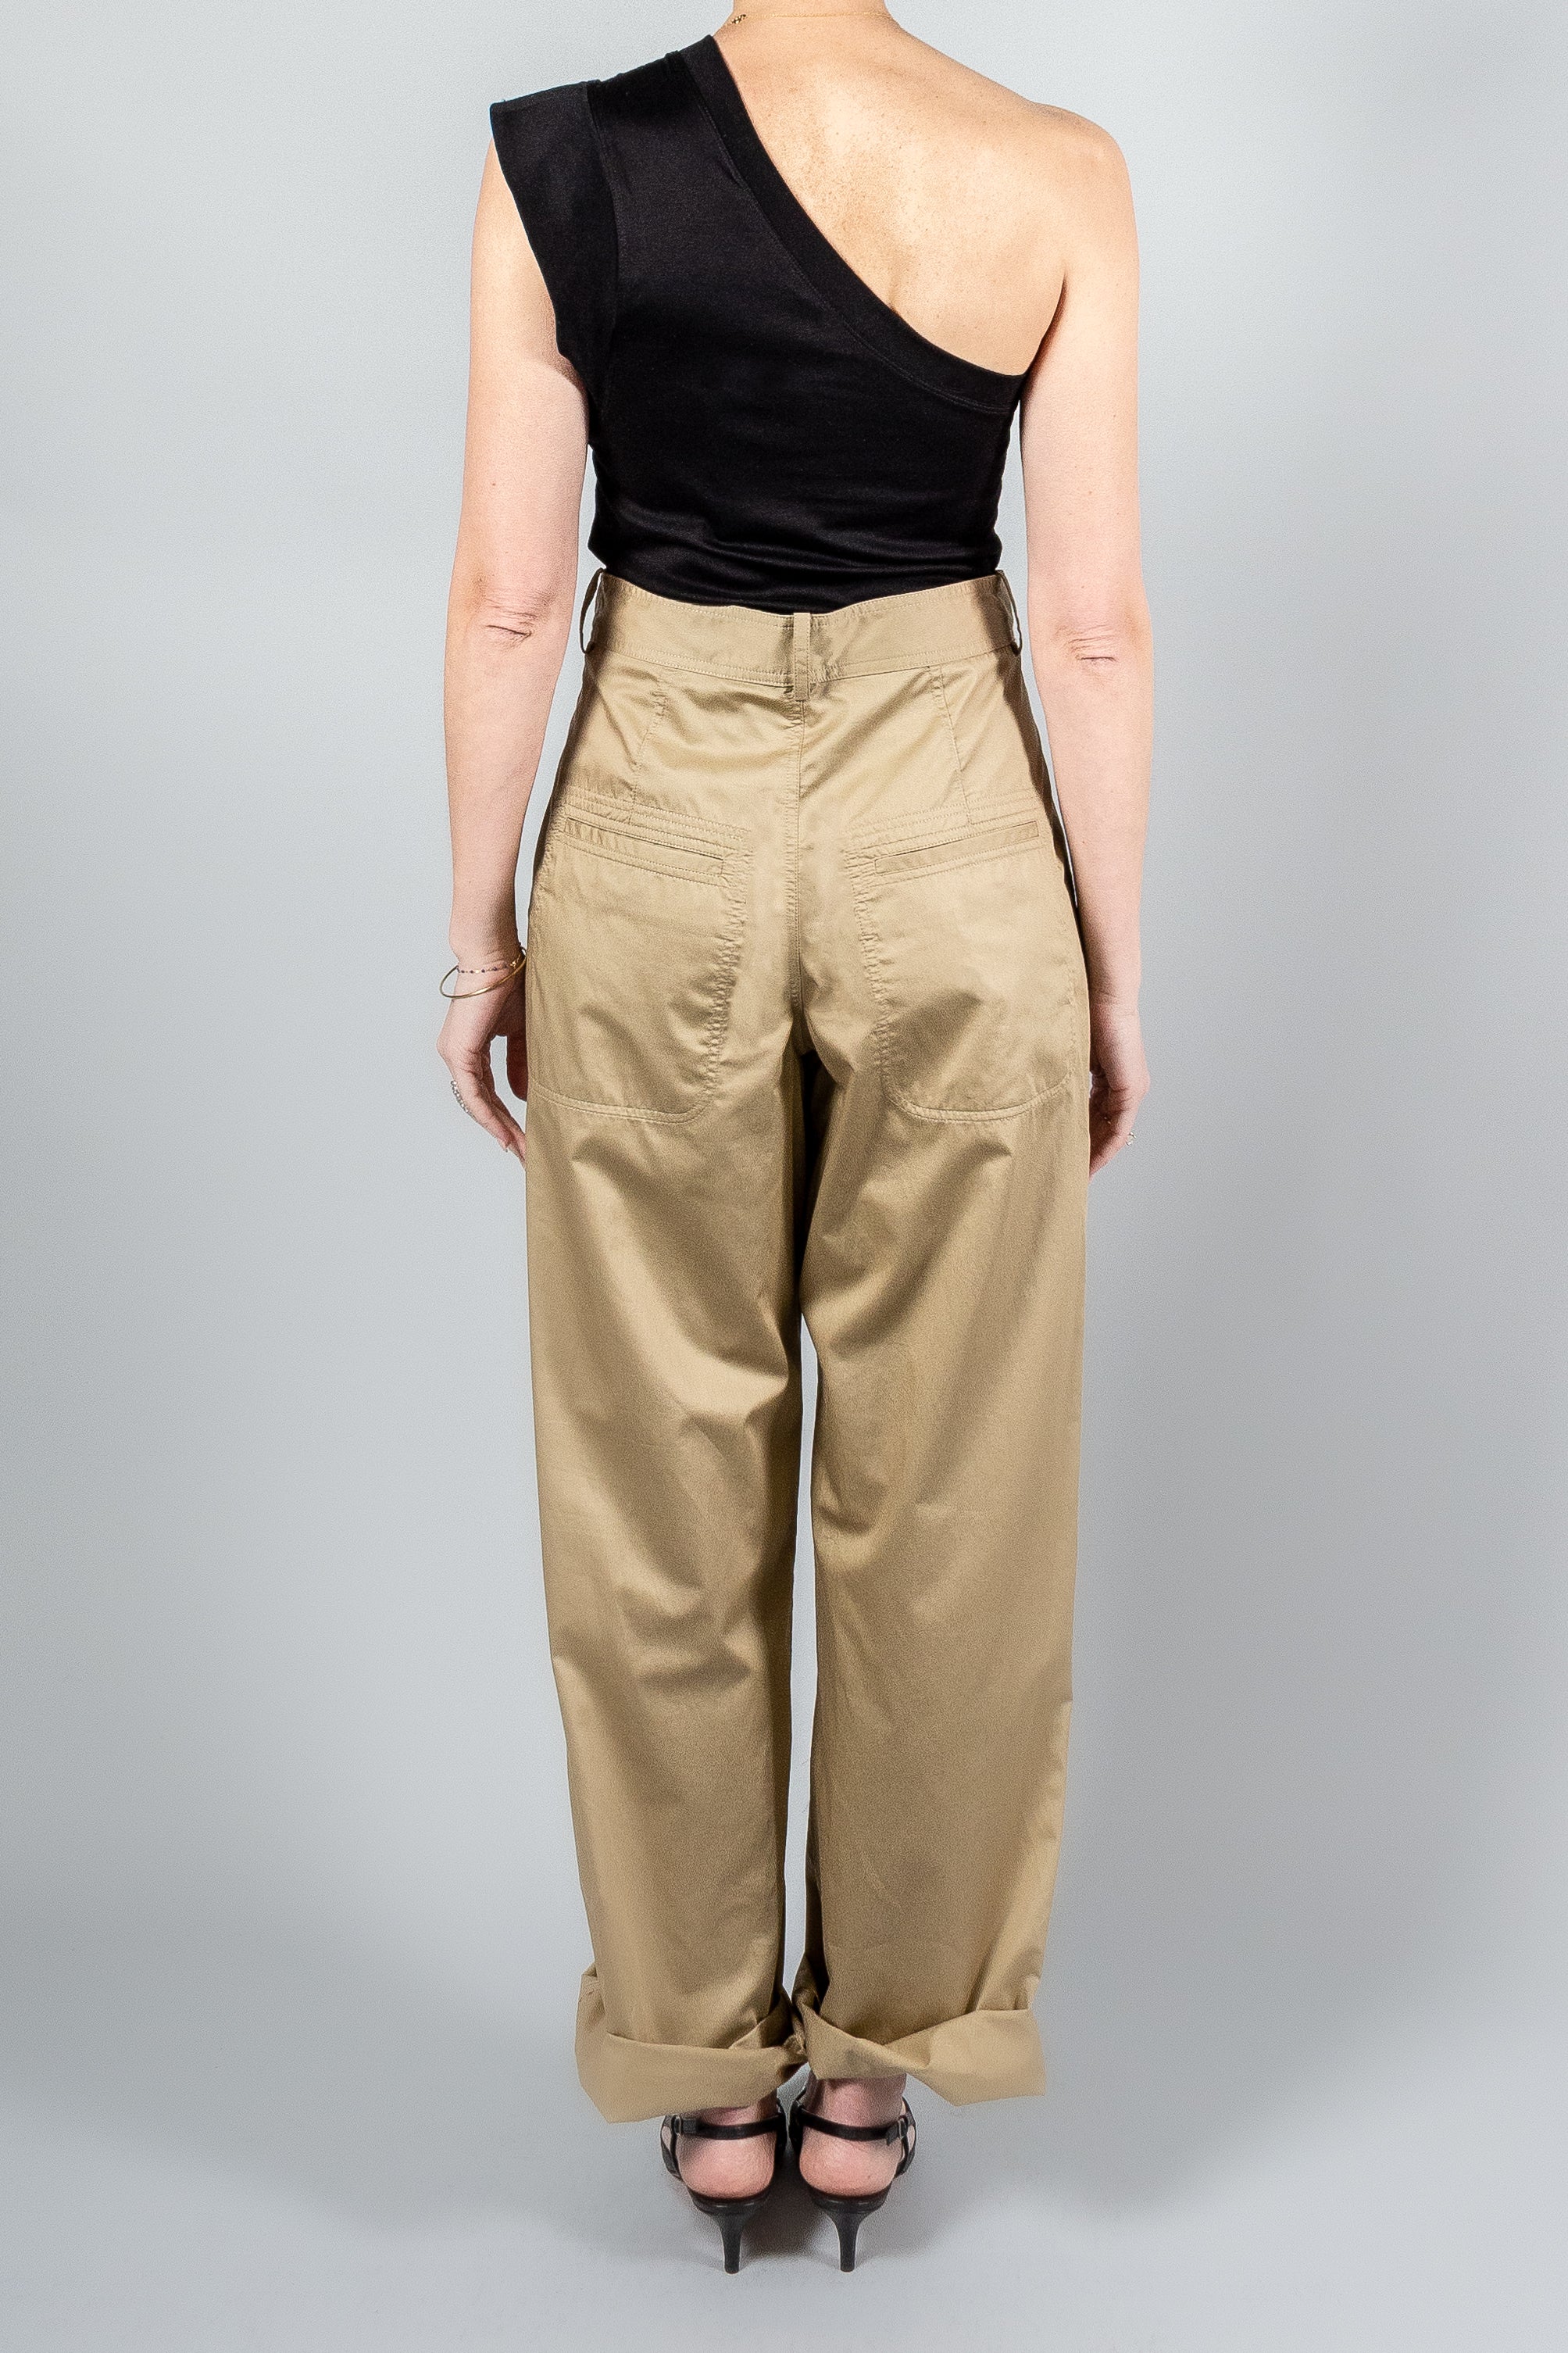 Isabel Marant Jolande Pants-Pants and Shorts-Misch-Boutique-Vancouver-Canada-misch.ca